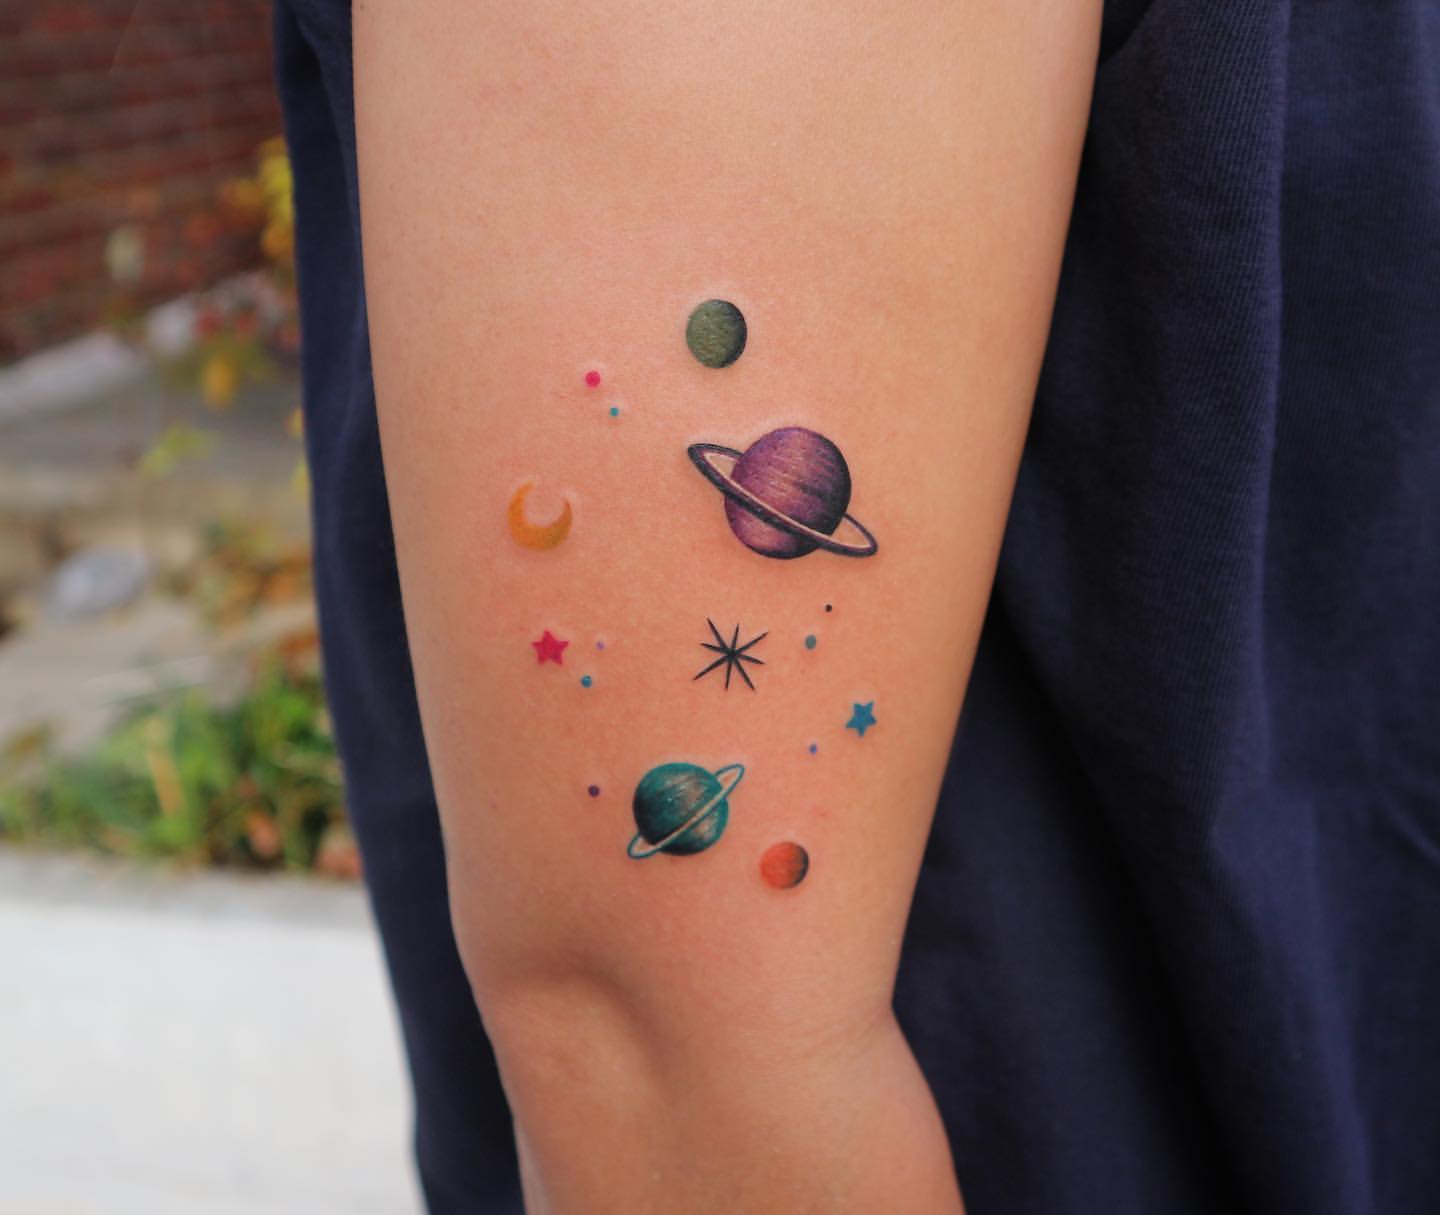 Galaxy Tattoos 42 Most Beautiful Ideas for a Perfect Tattoo